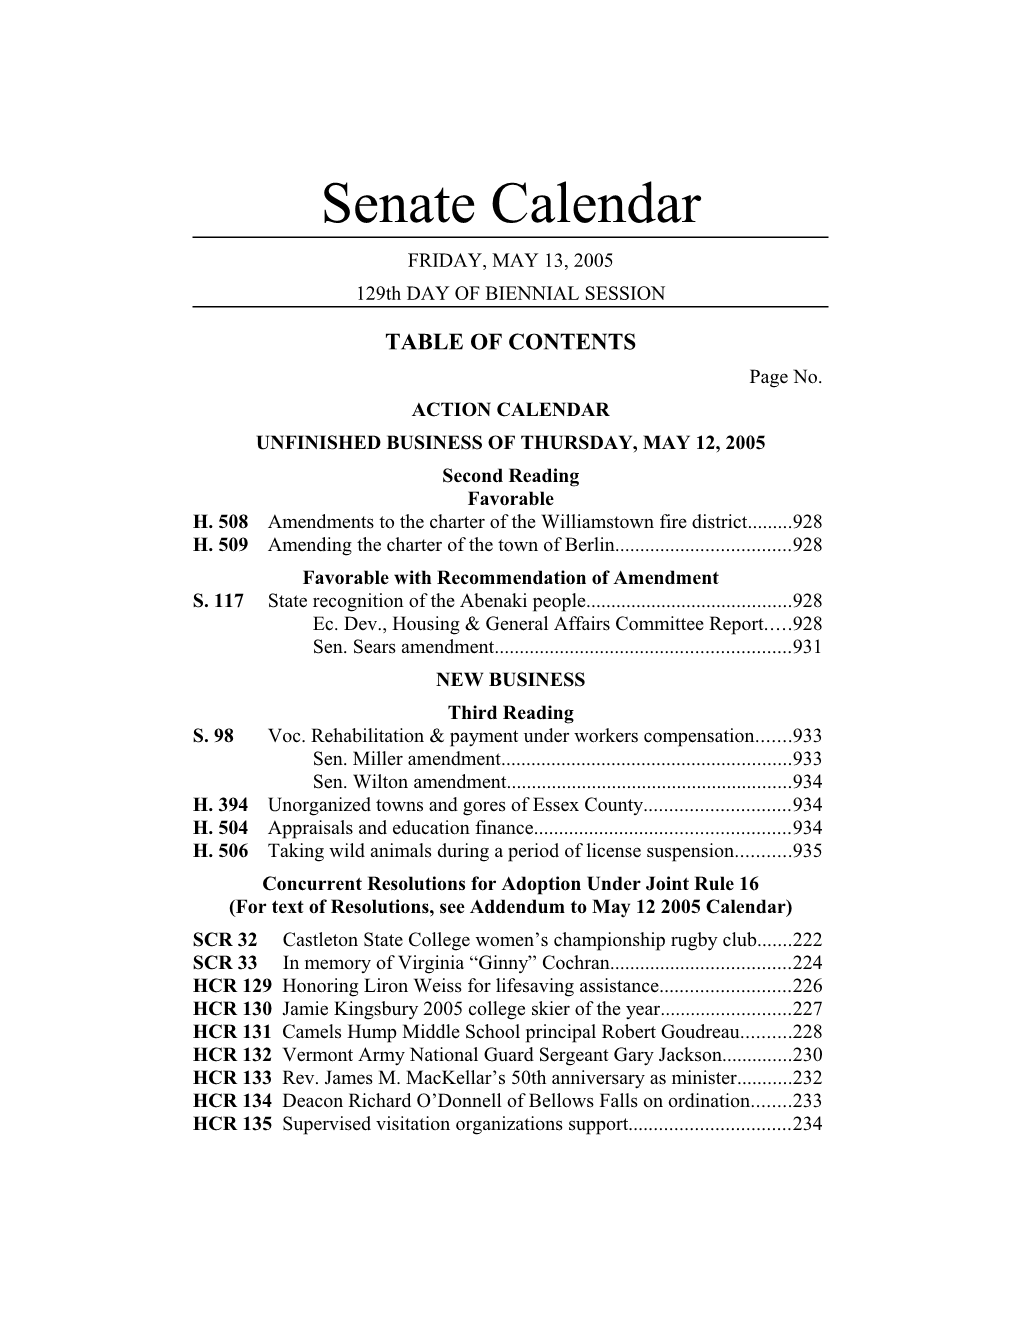 Senate Calendar s2